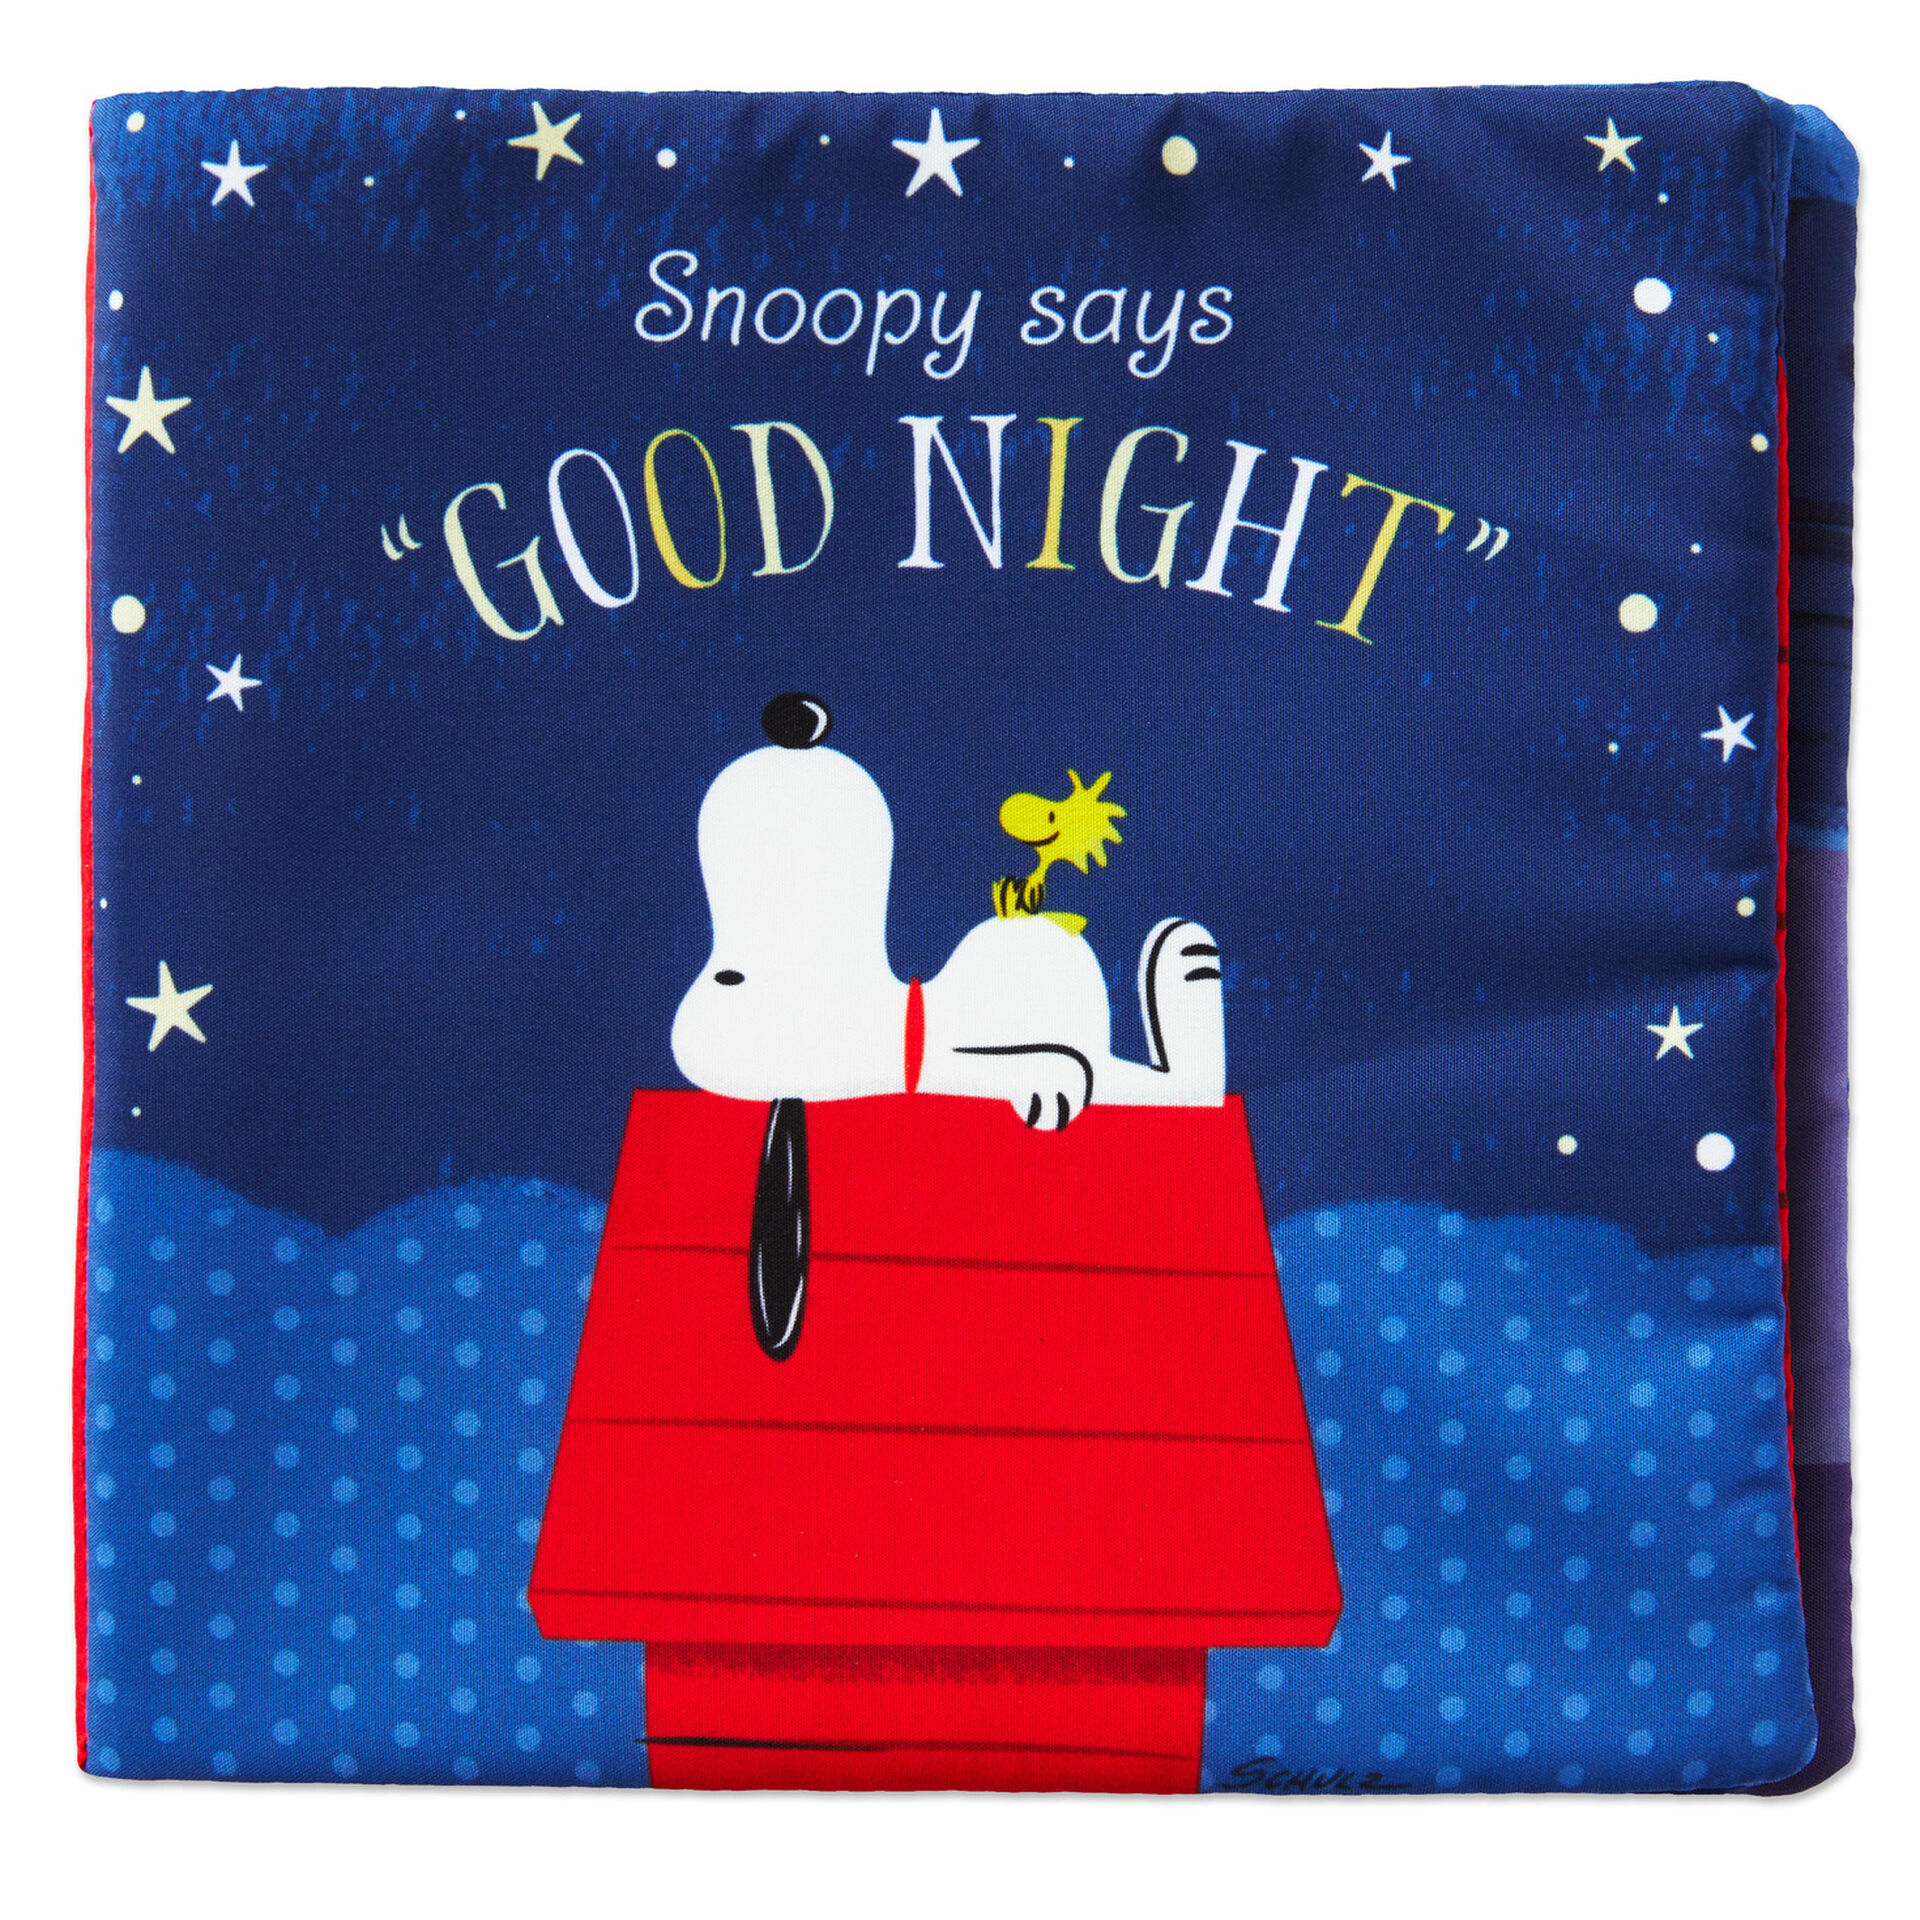 Peanuts Snoopy Says Good Night Cloth Book Kids Books Hallmark